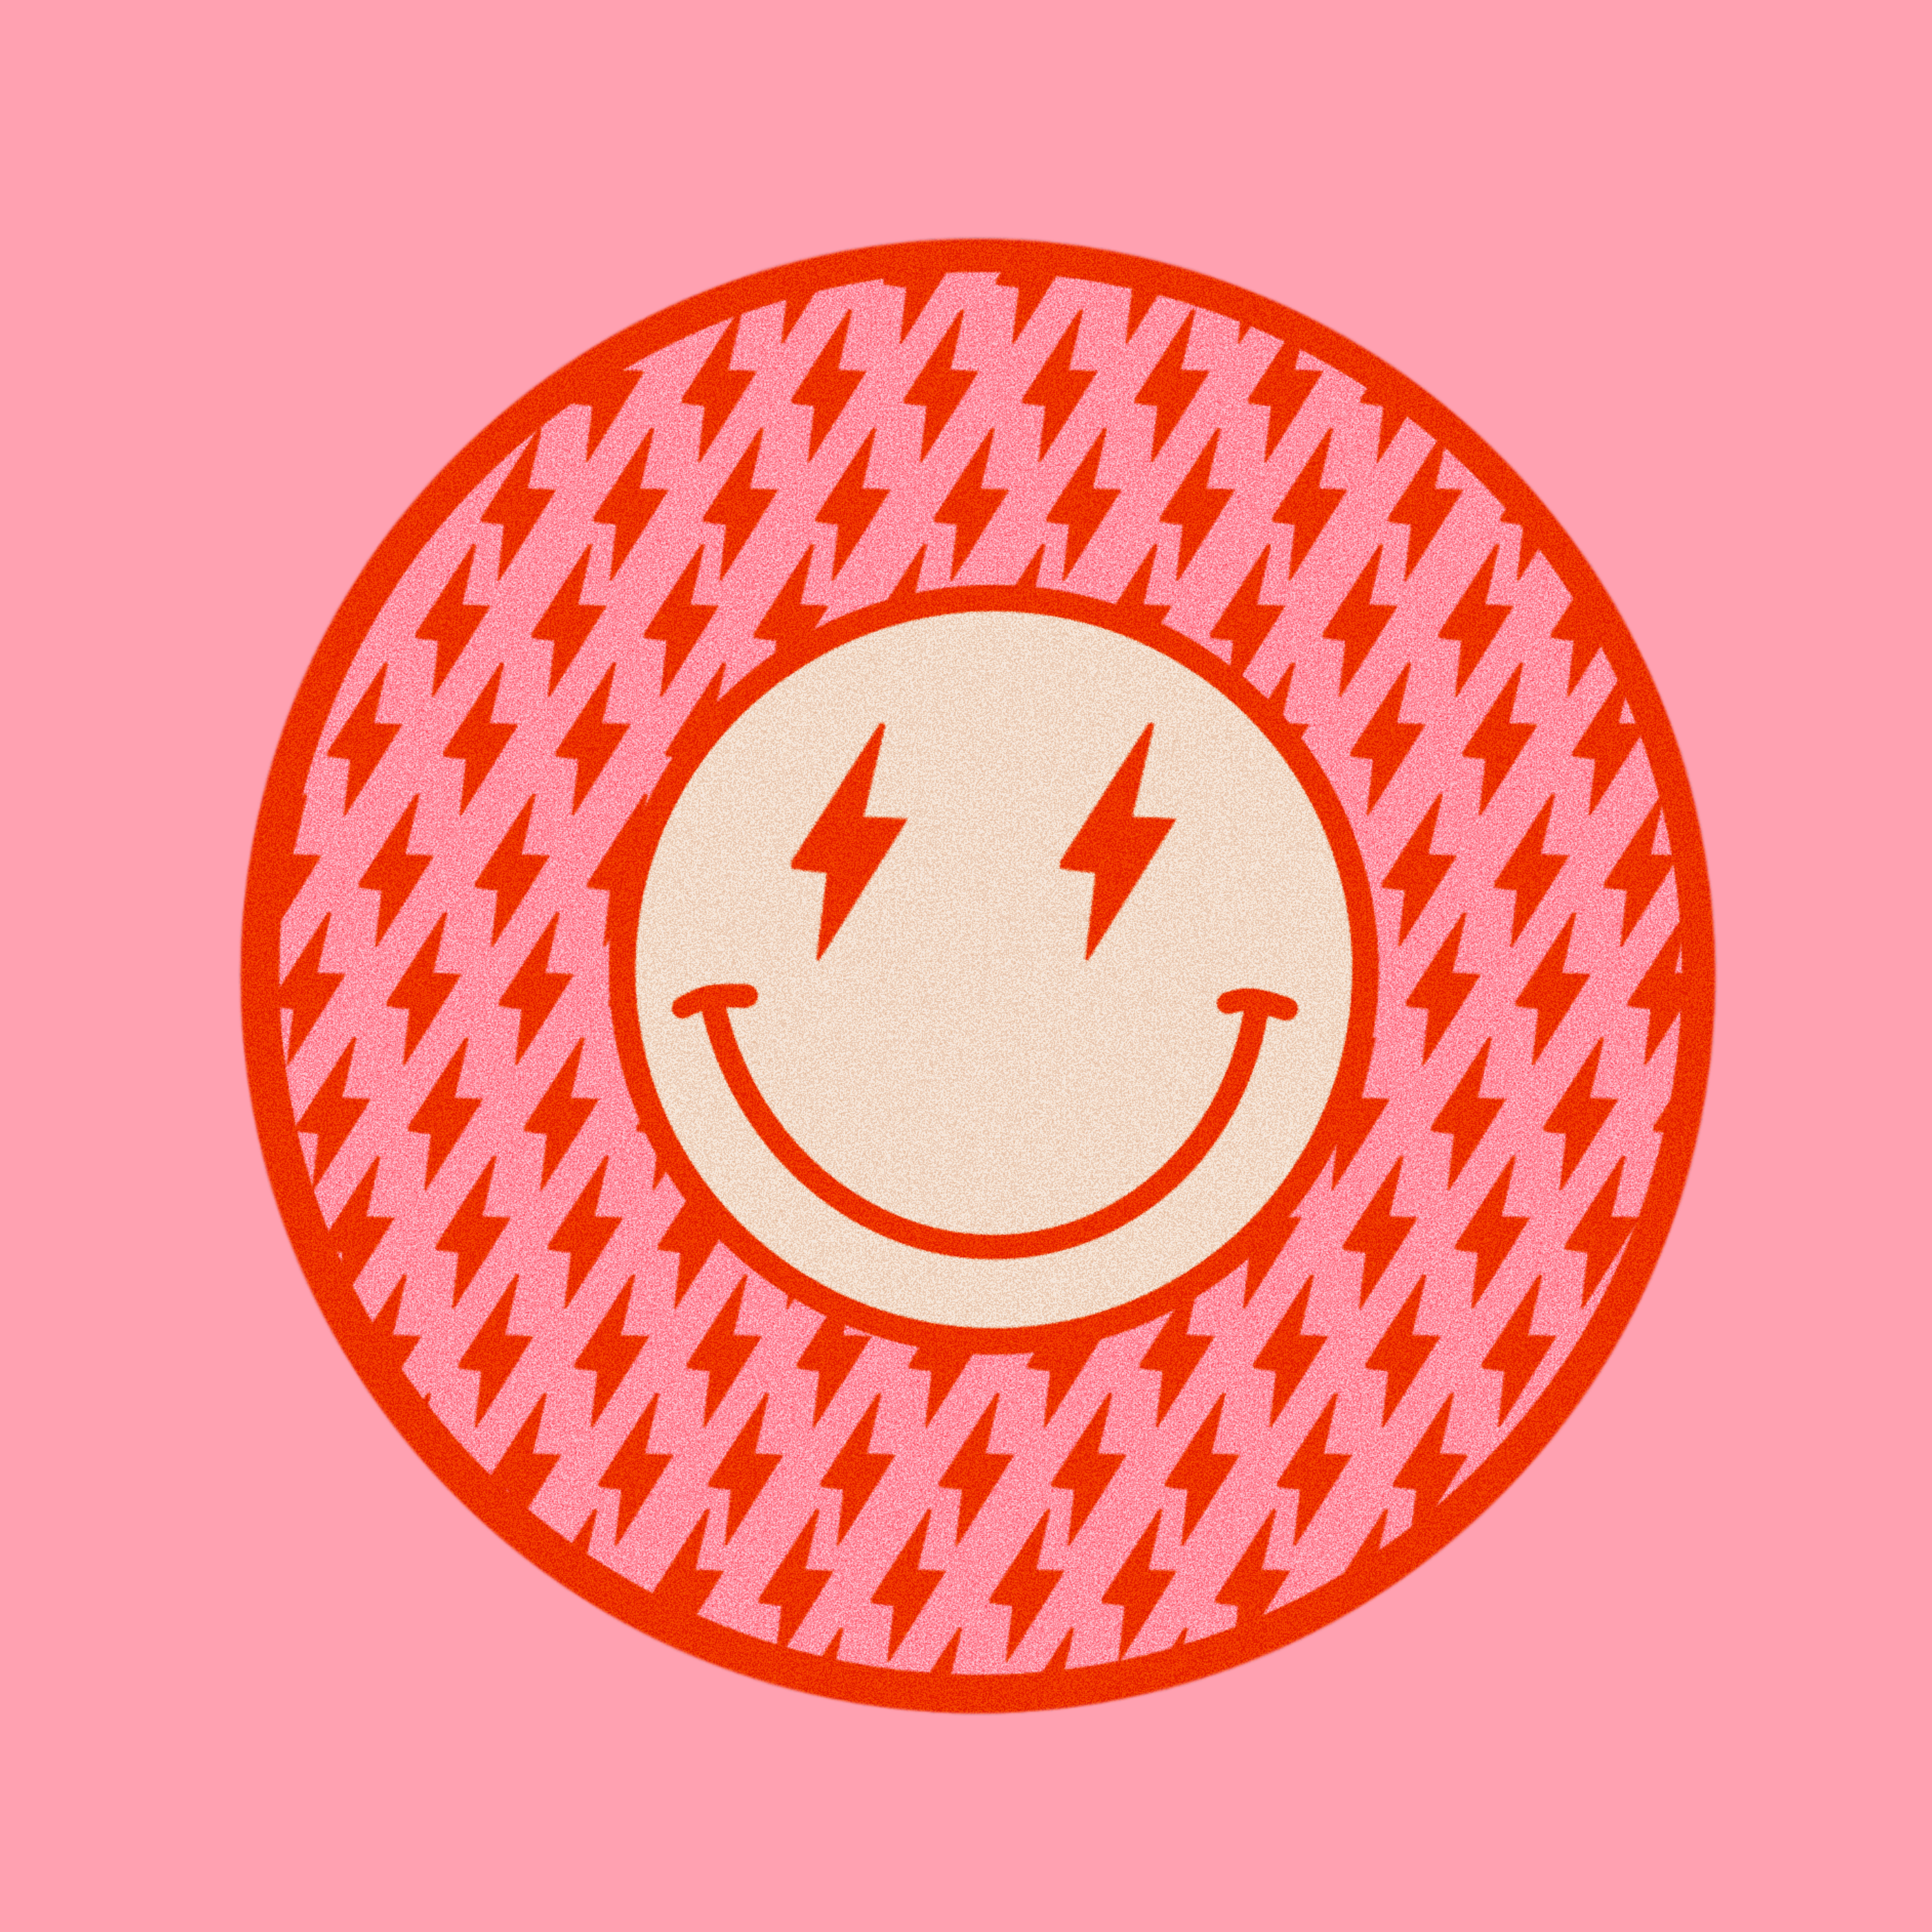 Red Smiley Face Sticker. Preppy wallpaper, Aztec pattern wallpaper, Preppy wall collage